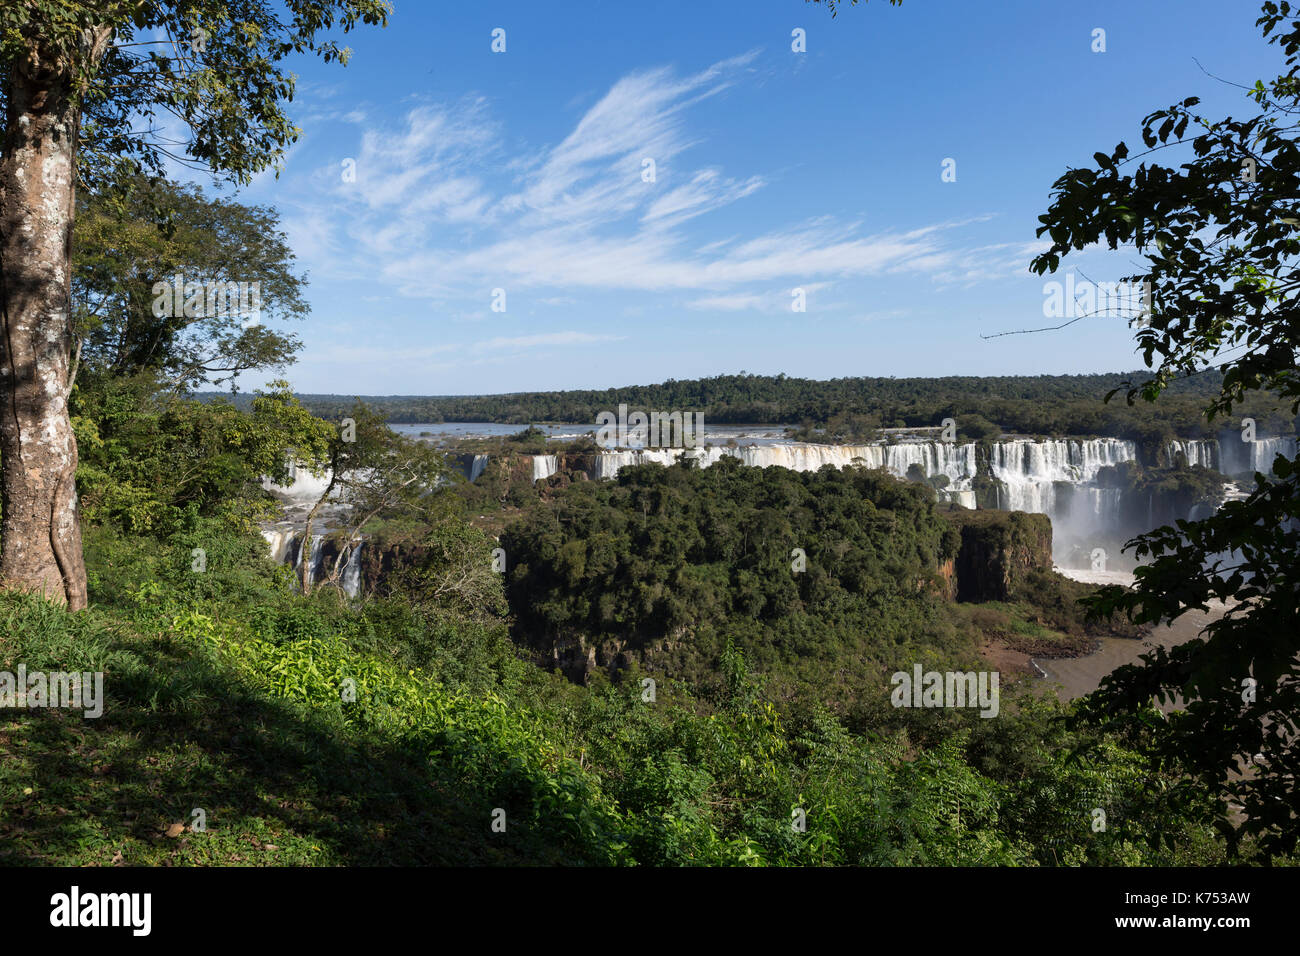 Iguassu Falls National Park. Foto Stock